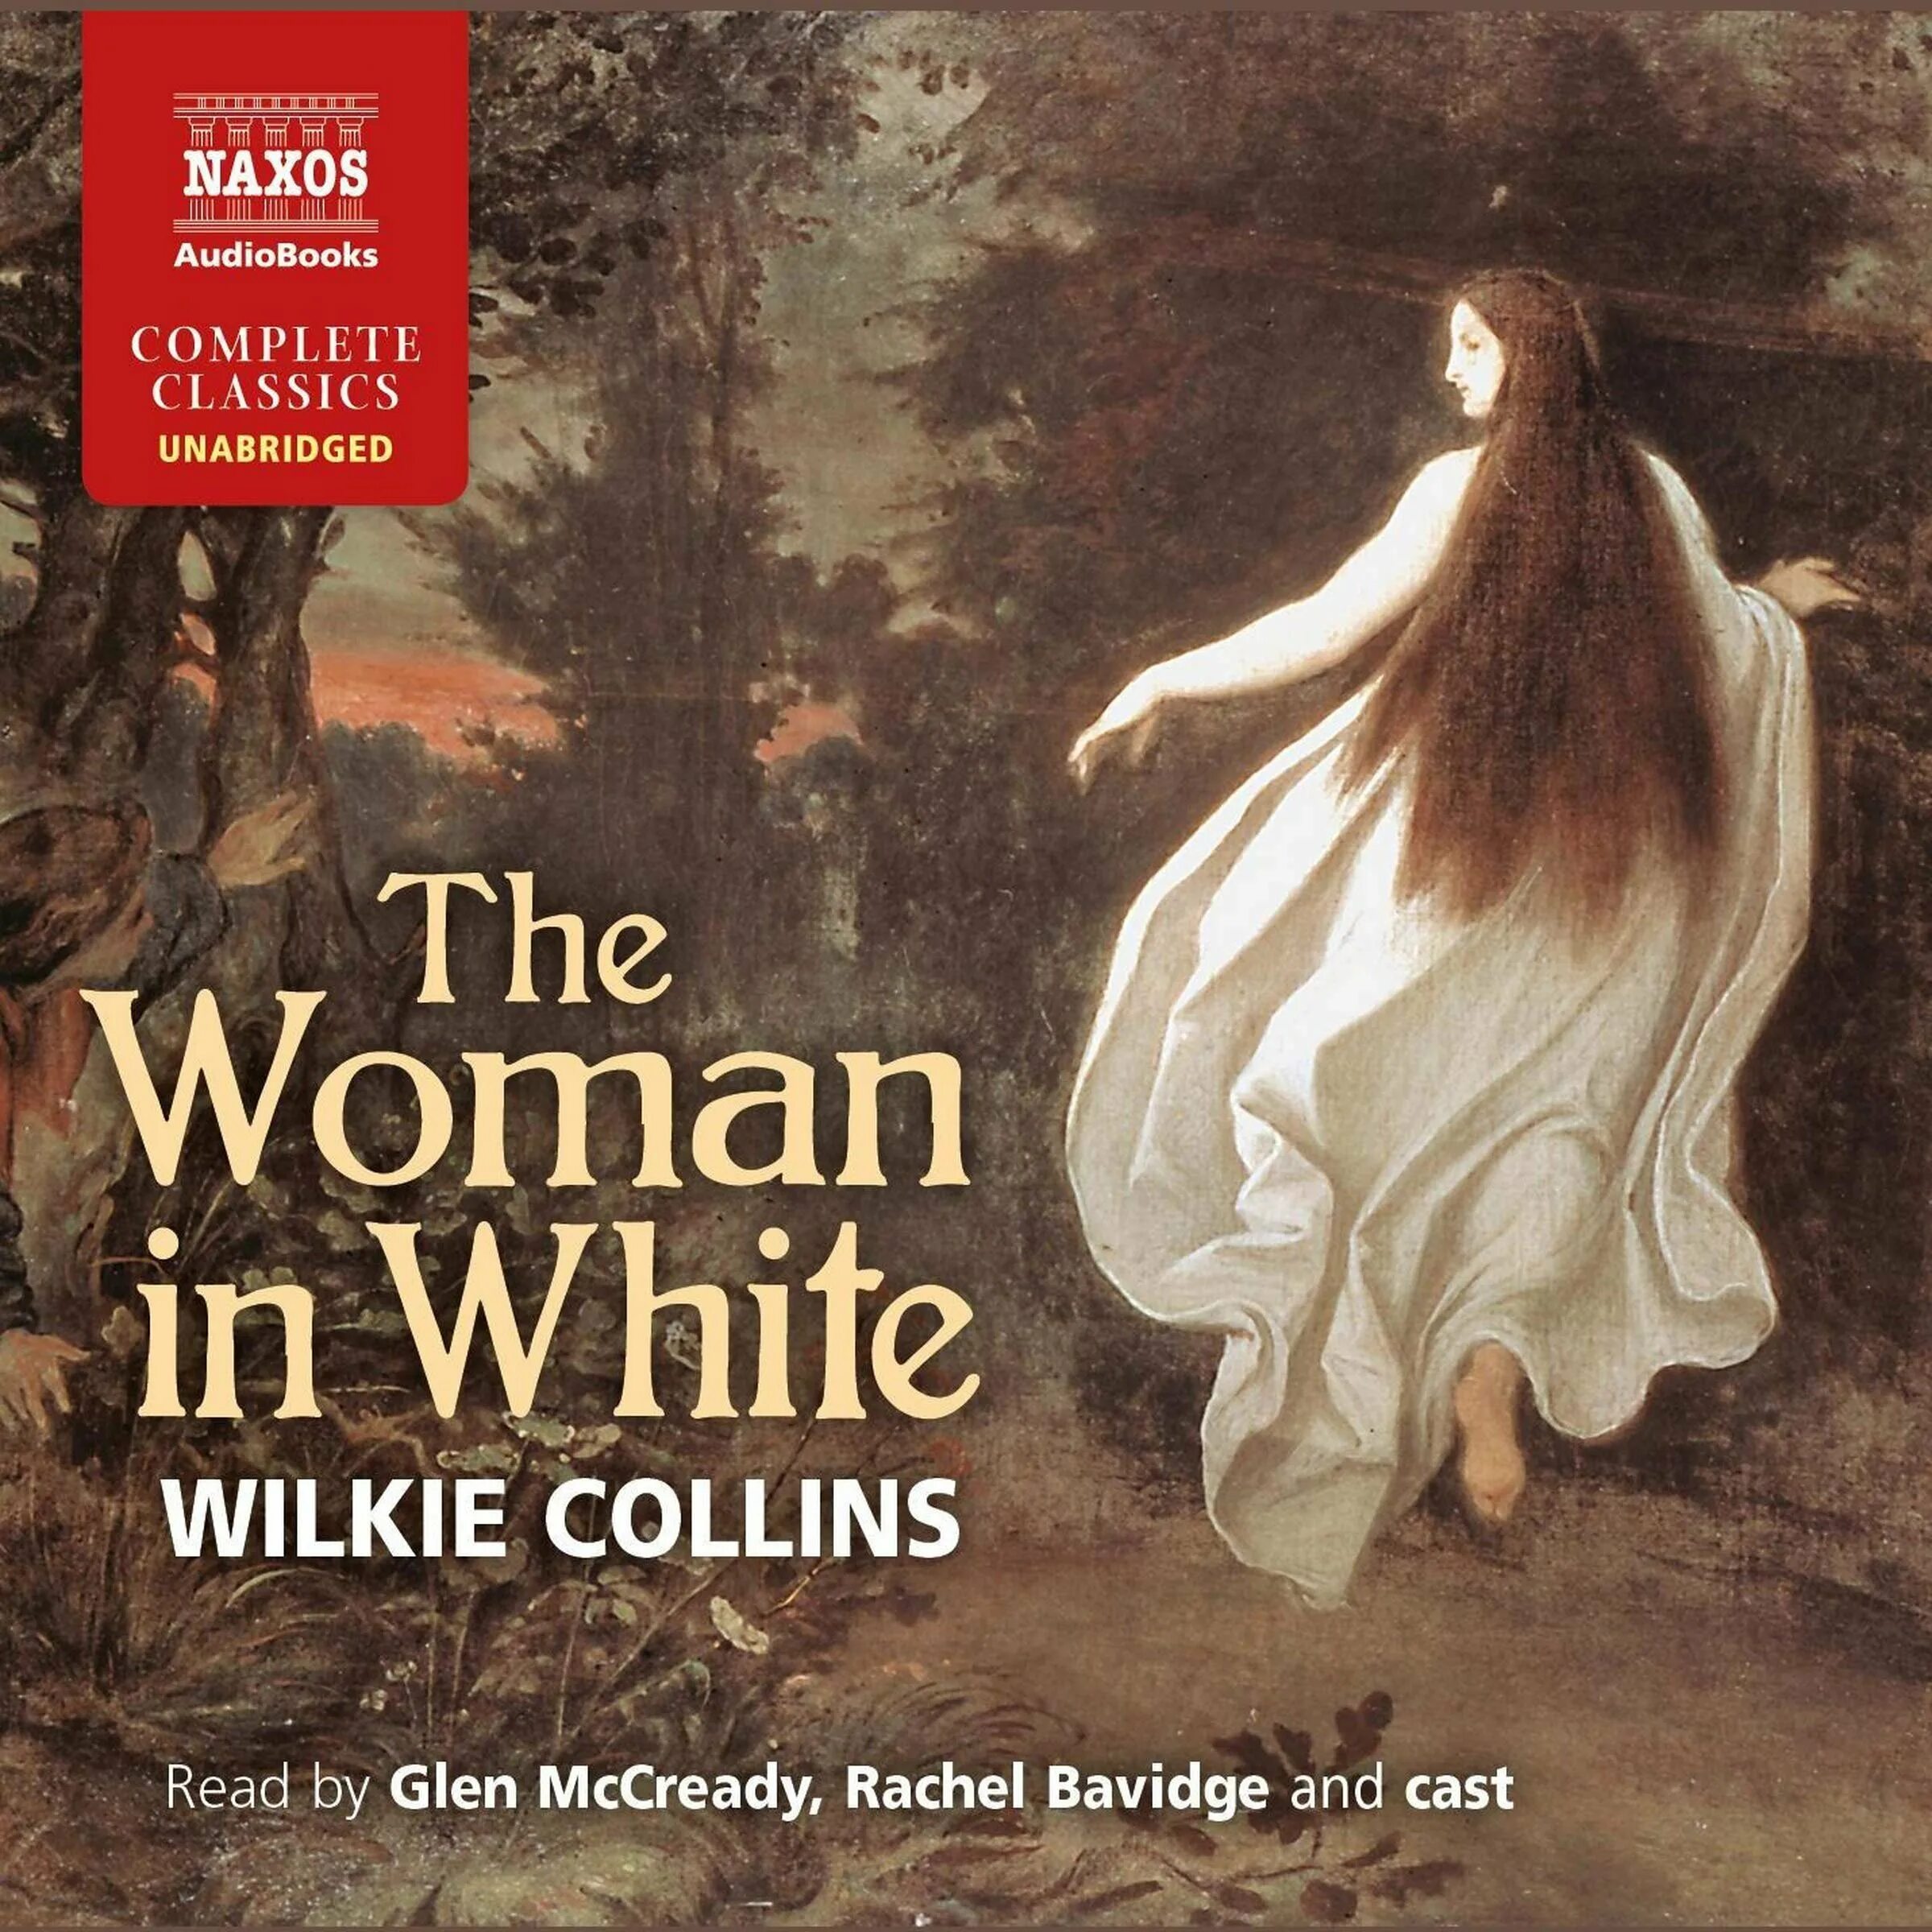 Woman книга. The woman in White книга. The woman in White Wilkie Collins. Женщина в белом Уилки Коллинз. Женщина в белом Уилки Коллинз книга.